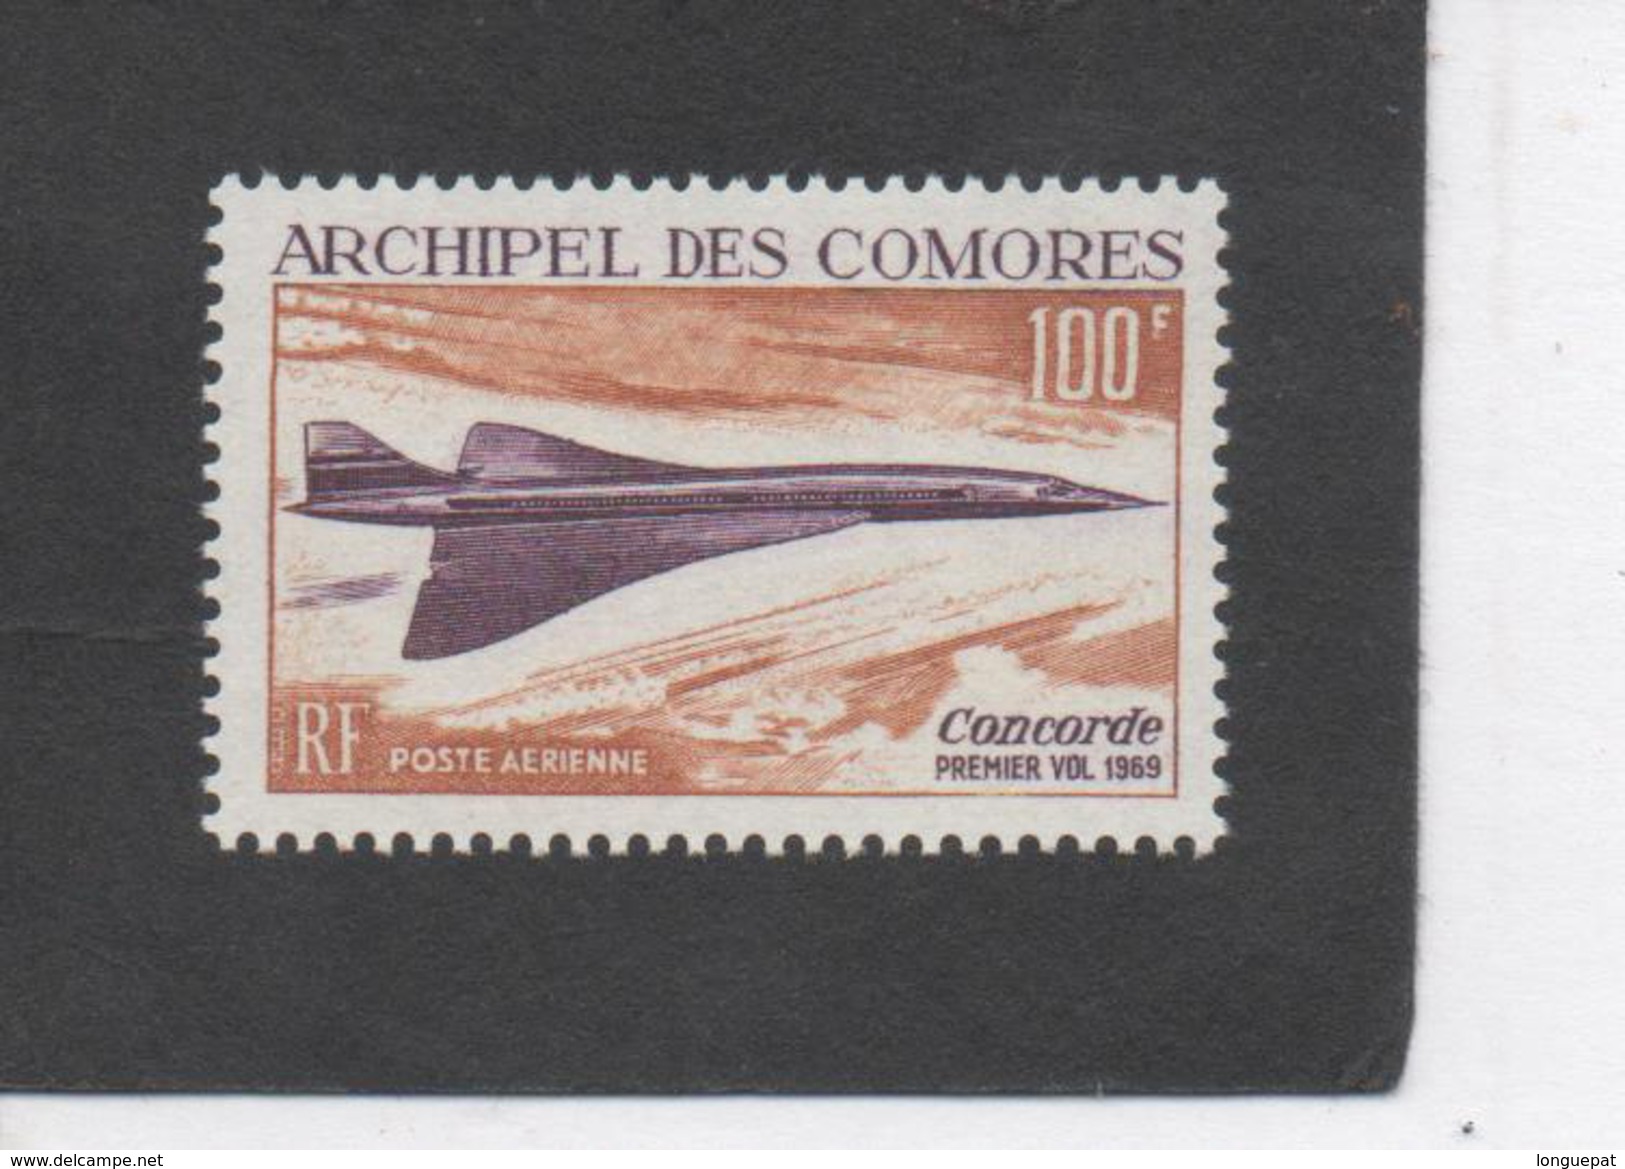 Comores -  Avion Supersonique "Concorde" - - Airmail